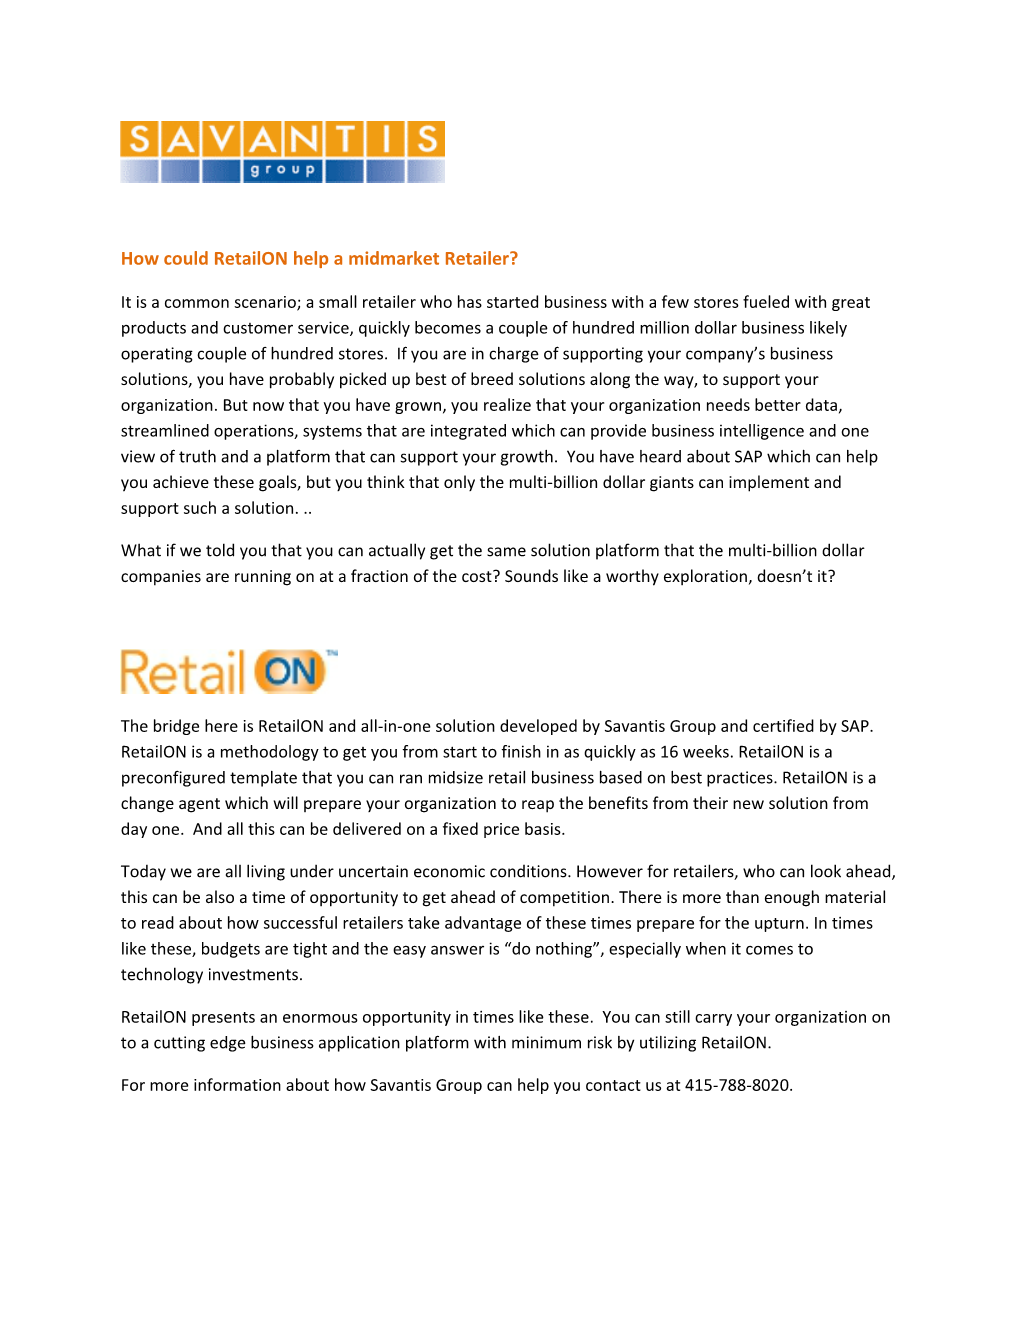 How Could Retailon Help a Midmarket Retailer?